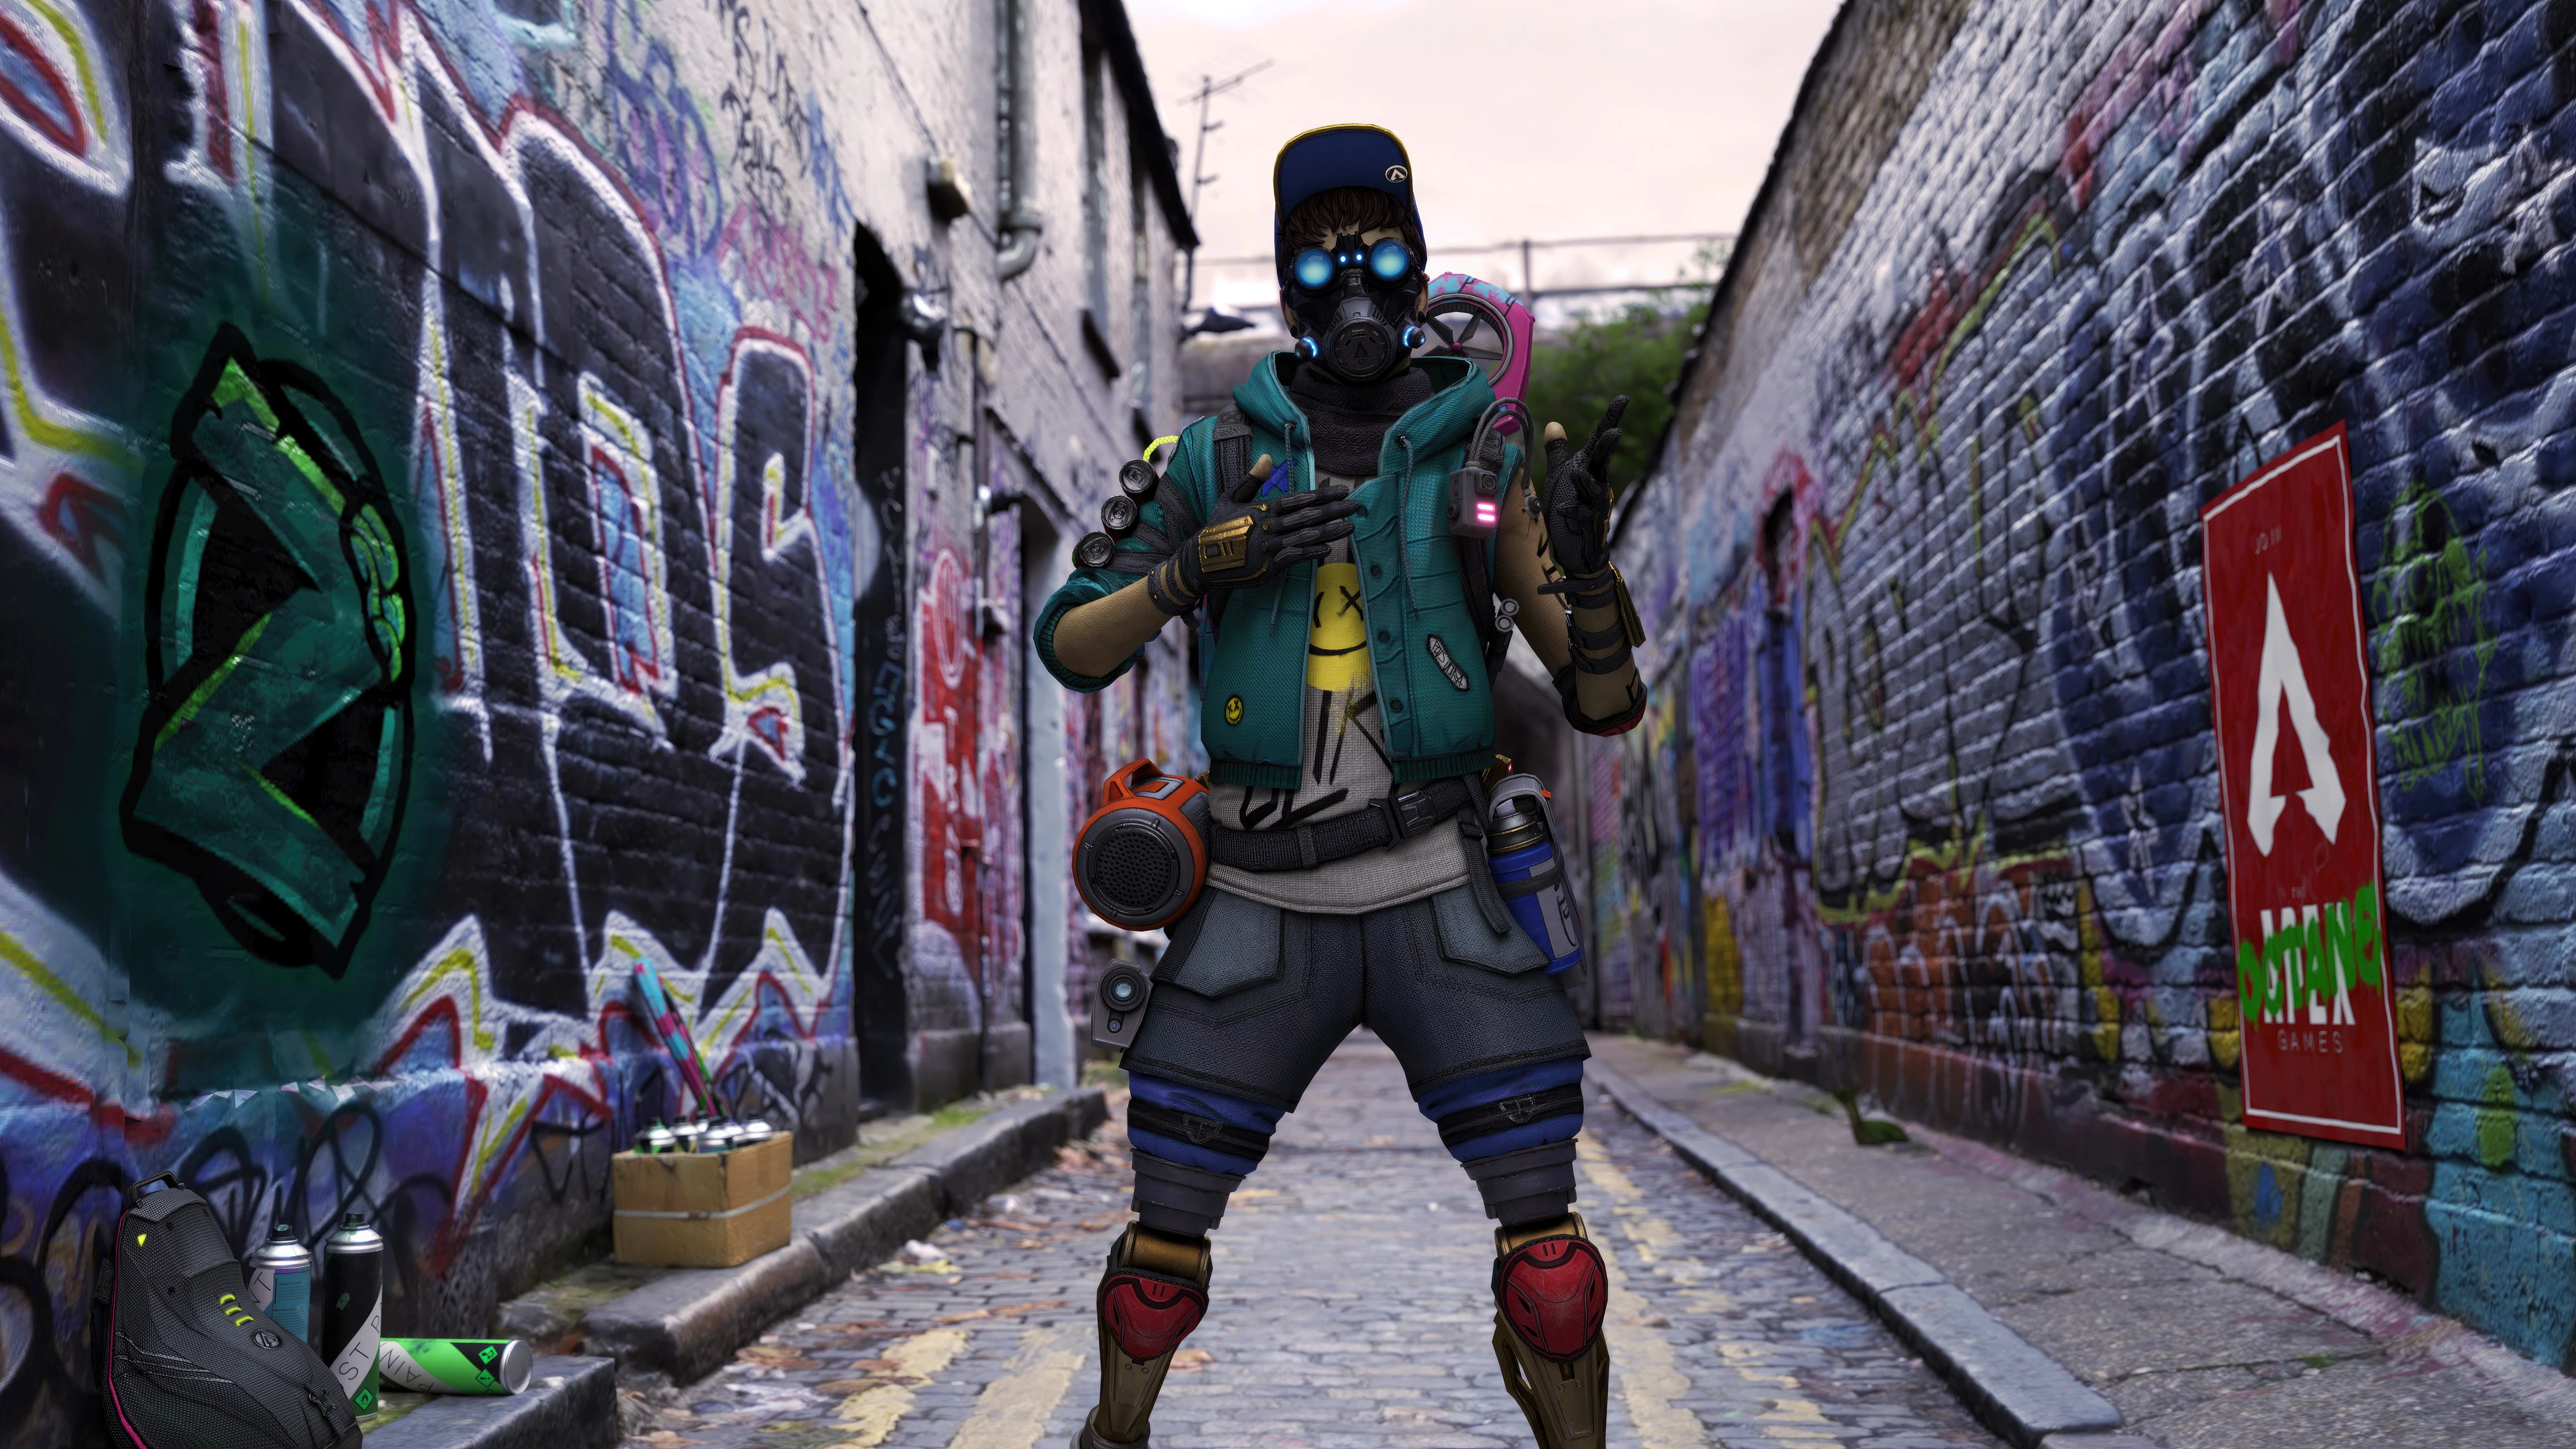 the masked urban explorer 9e.jpg